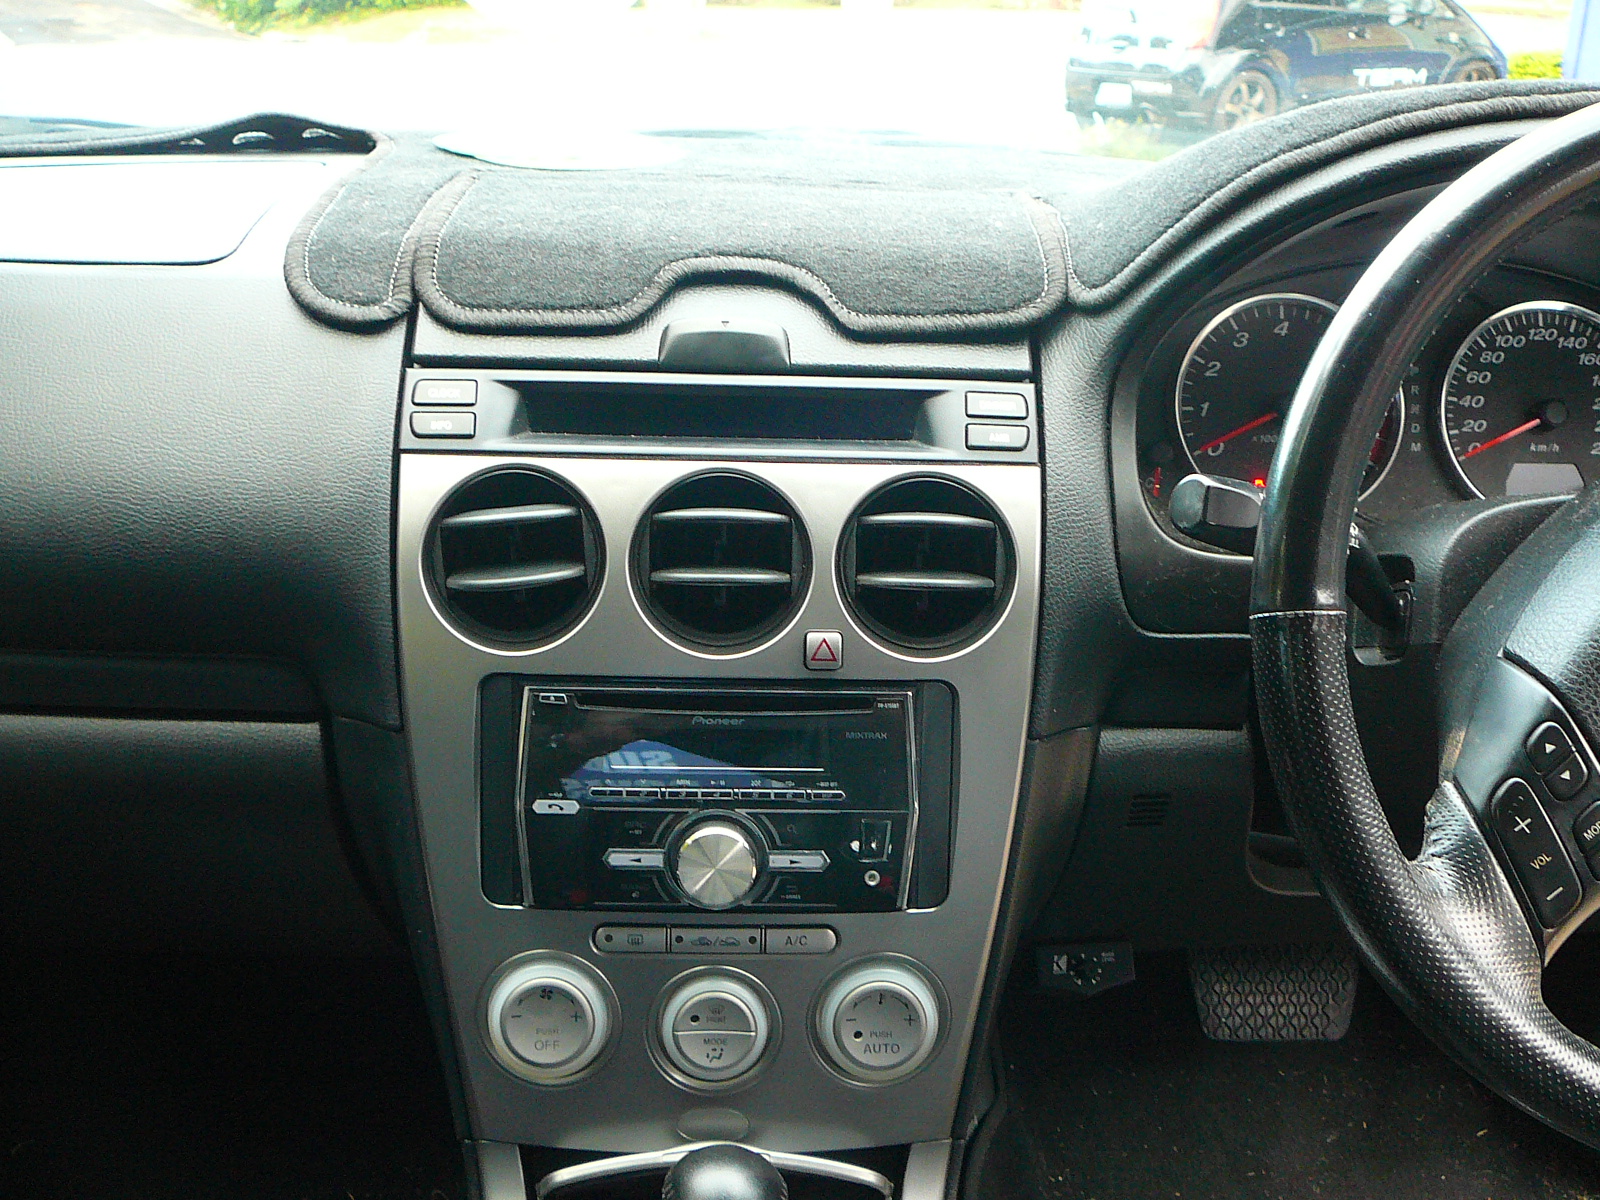 Mazda 6 2003, Pioneer FH-X755BT Double Din Installation